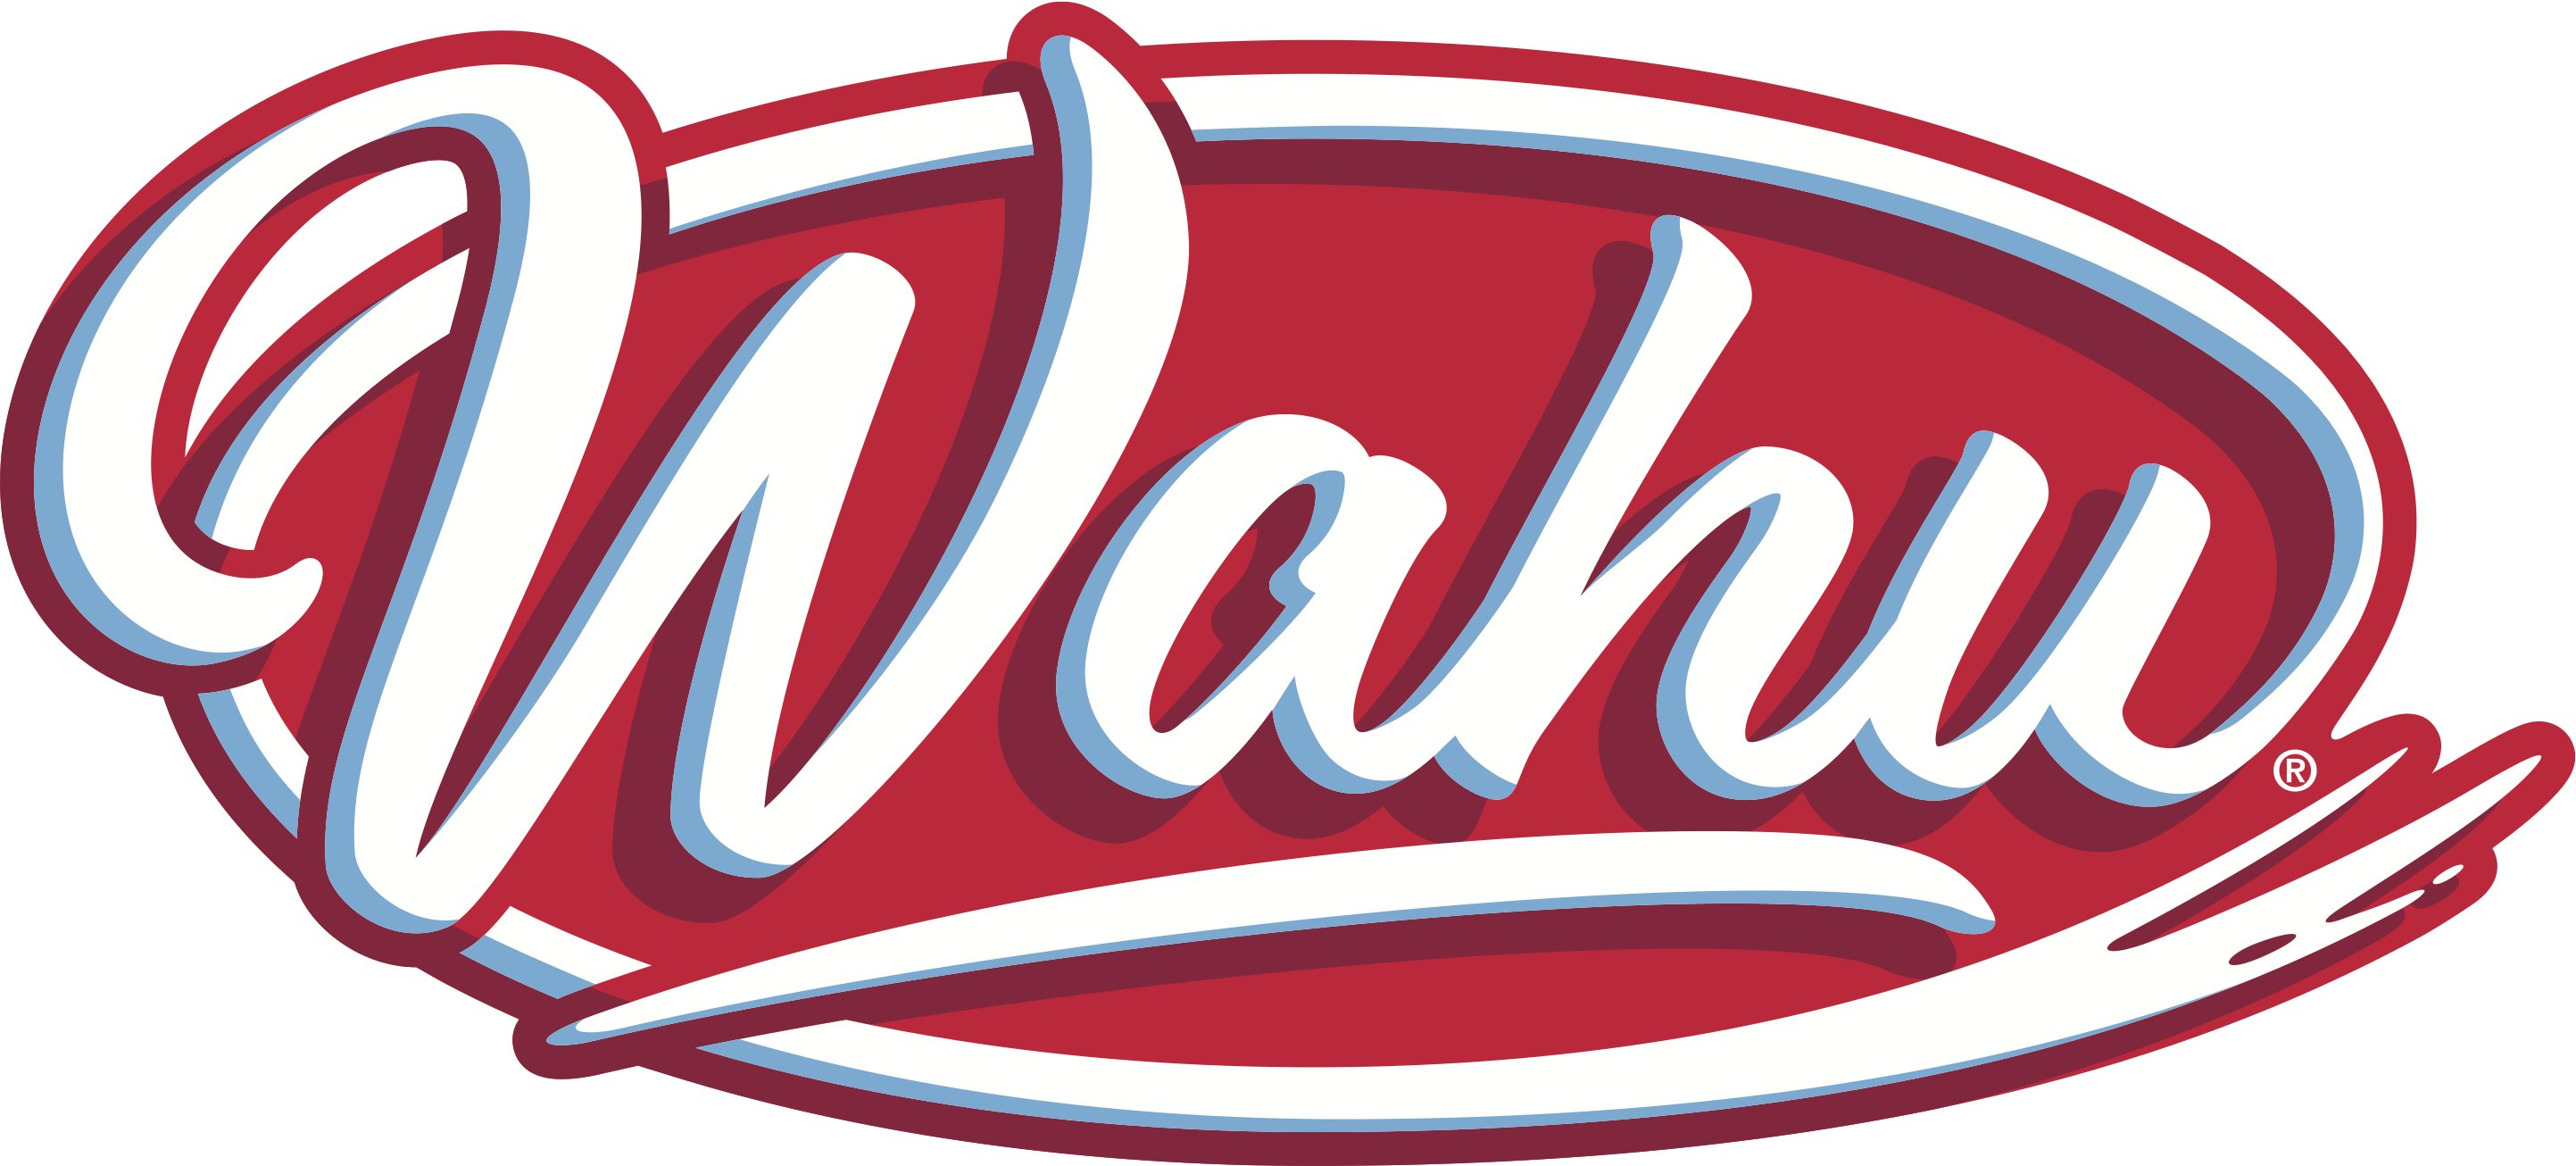 Wahu-logo